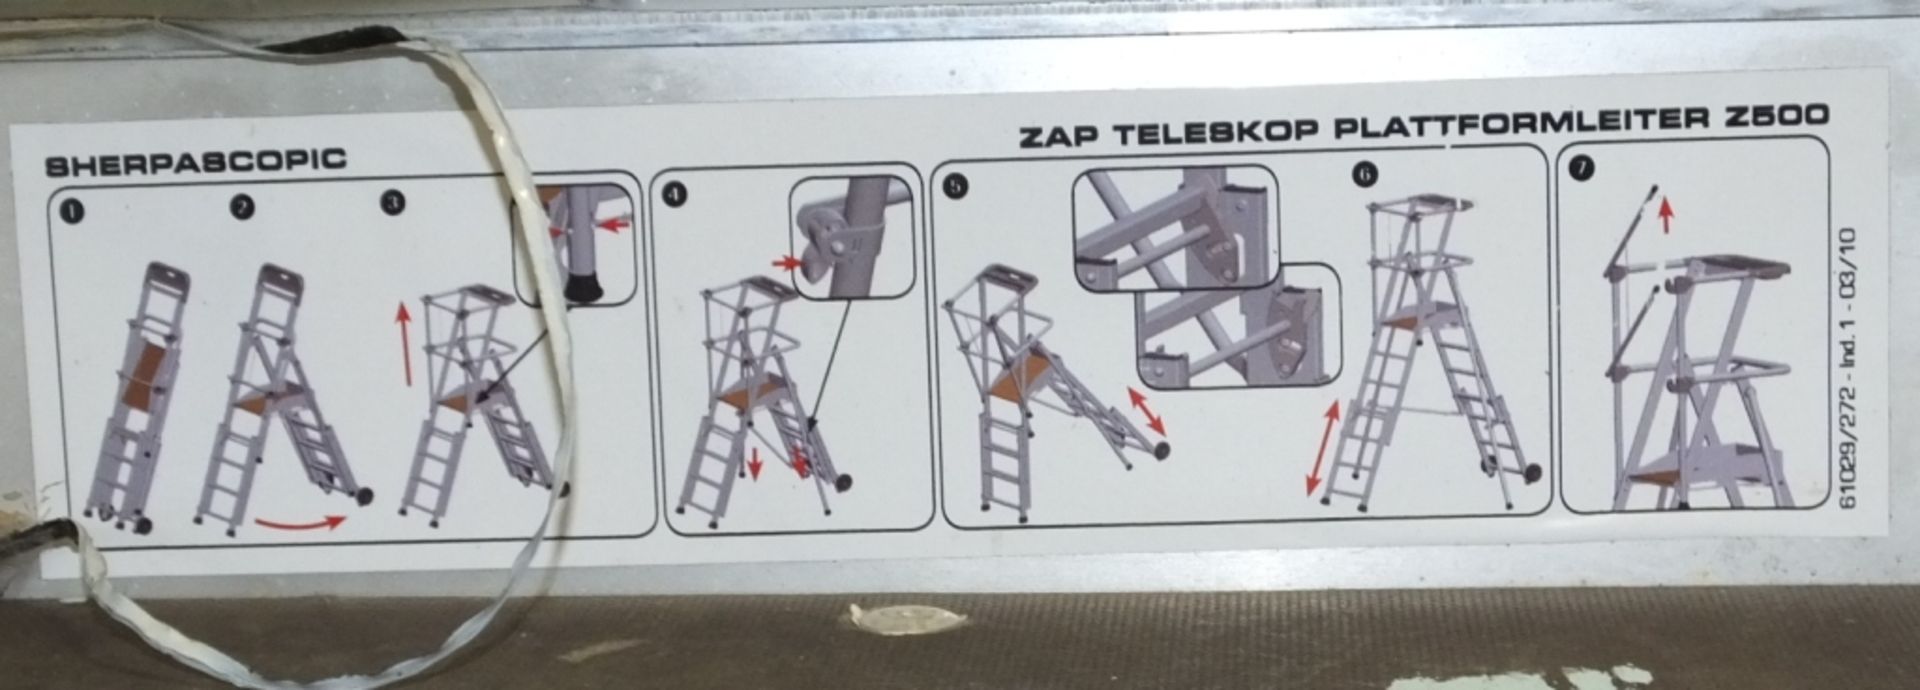 Tubesca Aluminium Multi Function Step ladder - Sherpasonic Zap Teleskop Z500 - Image 3 of 3